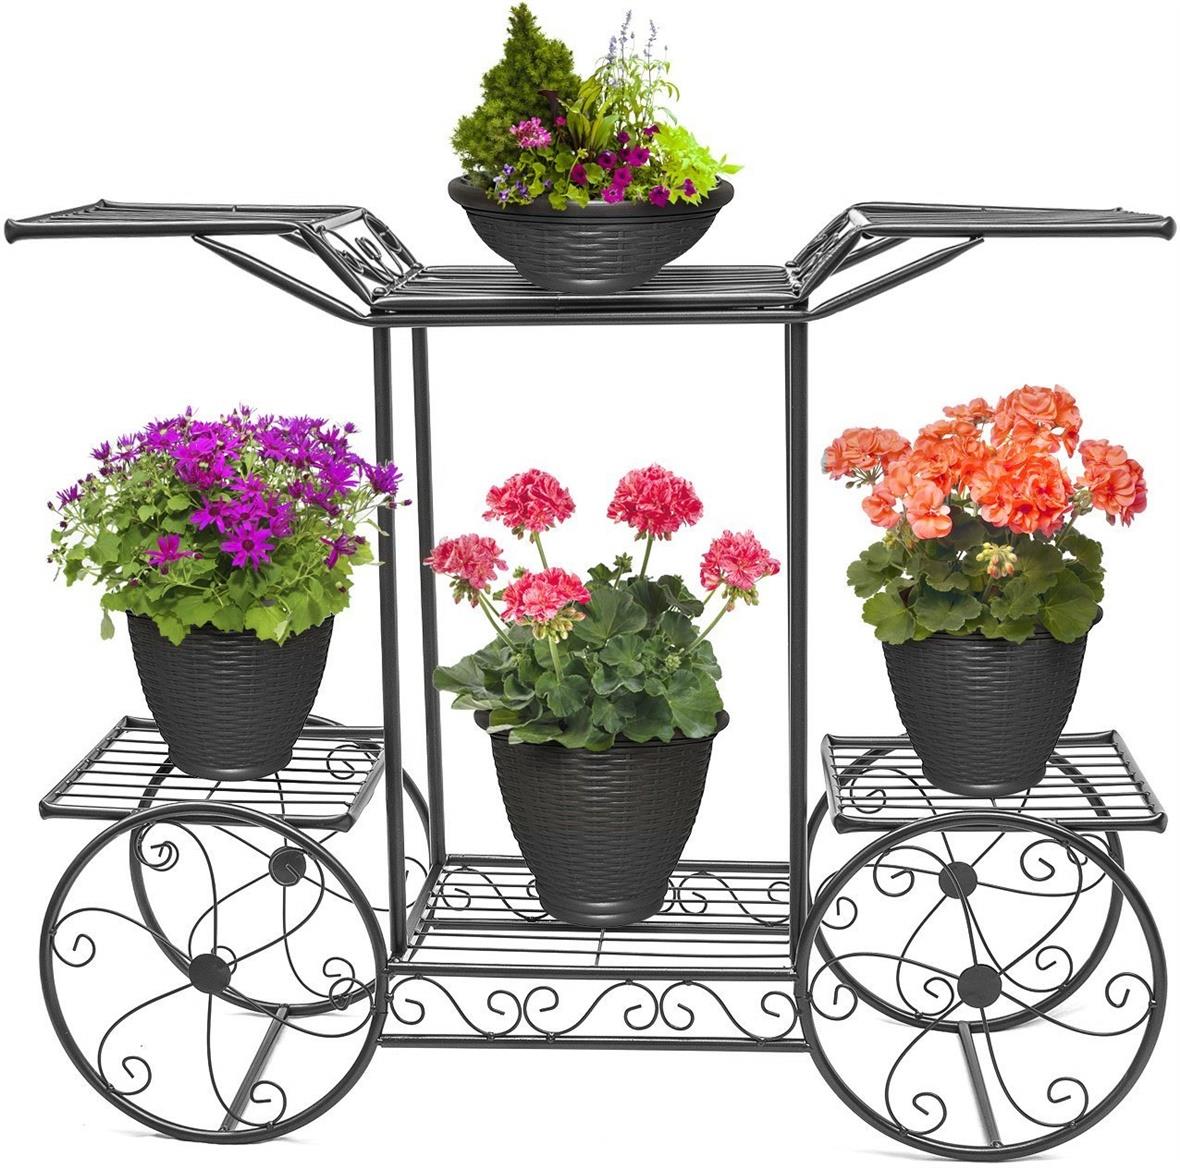 Ktaxon 6-Tier Garden Cart Stand & Flower Pot Metal Plant Holder Display Rack, Black - image 1 of 7